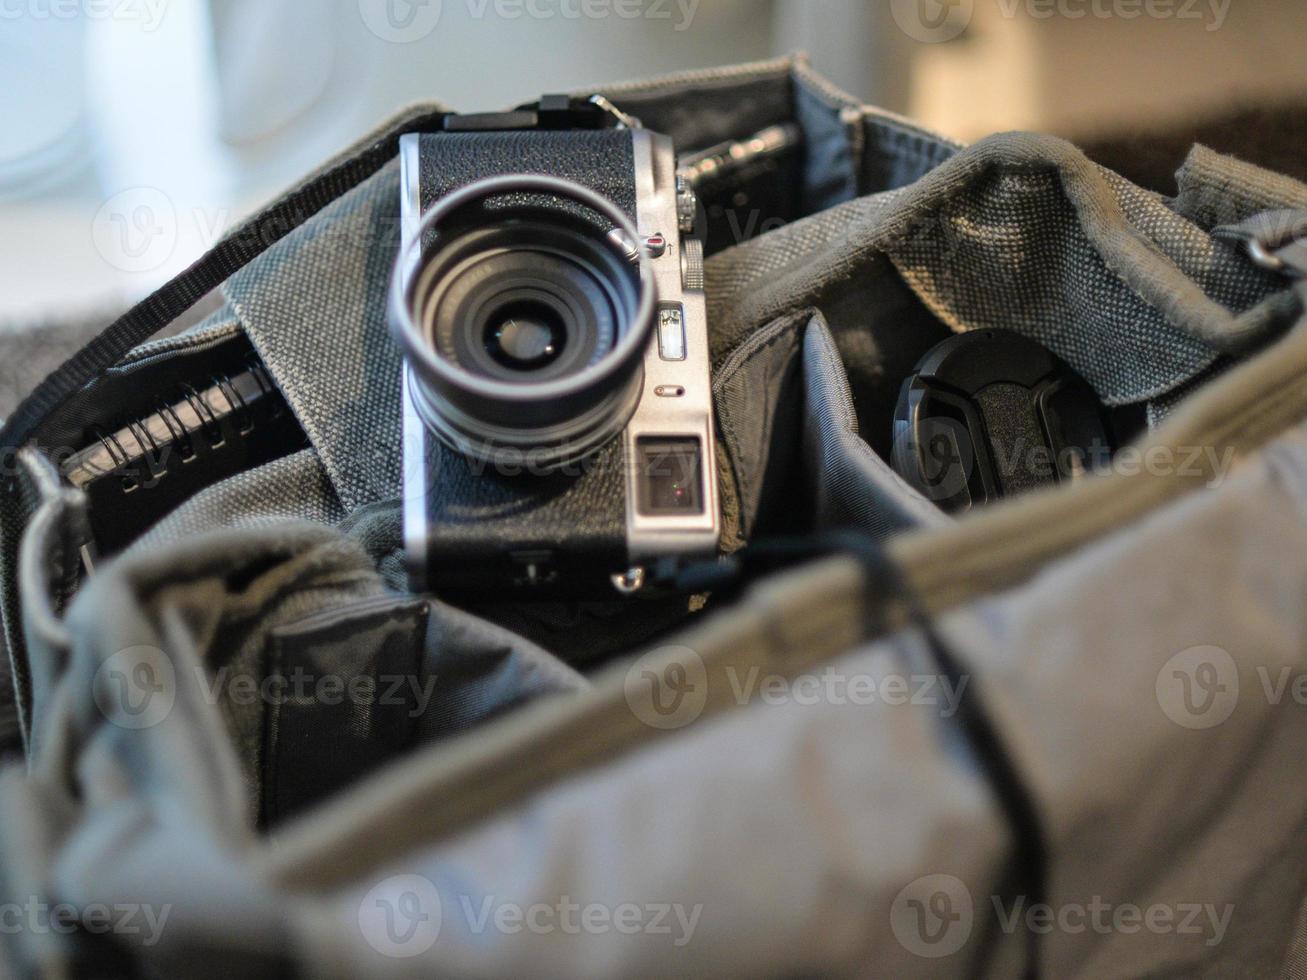 Digital camera in a canvas bag photo